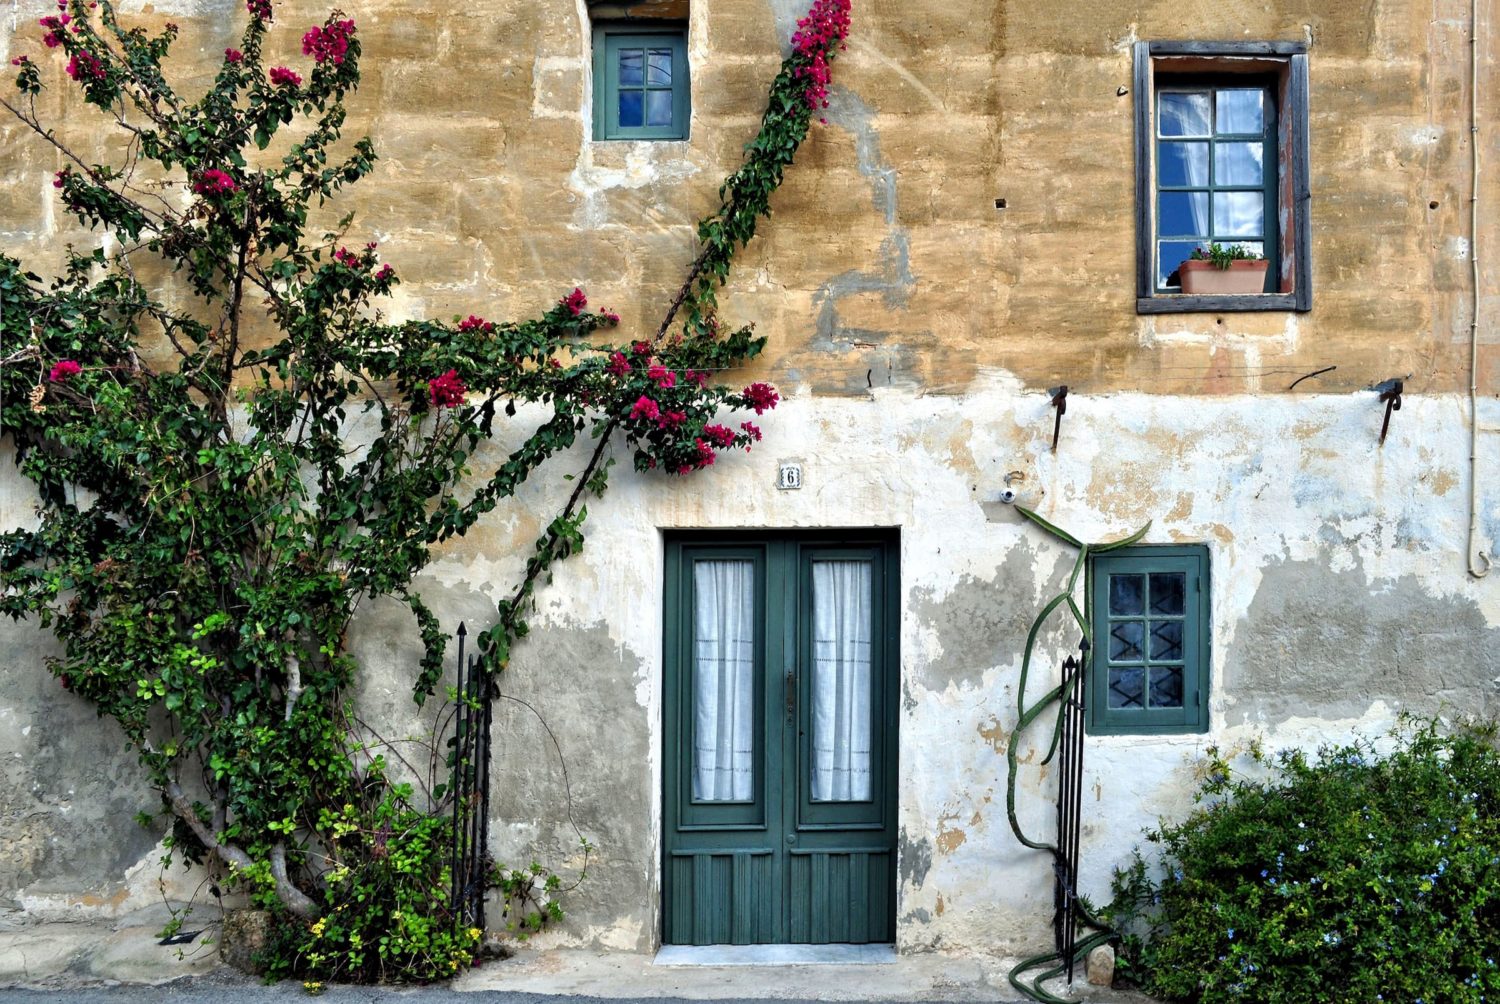 Where to live: Malta or Gozo?